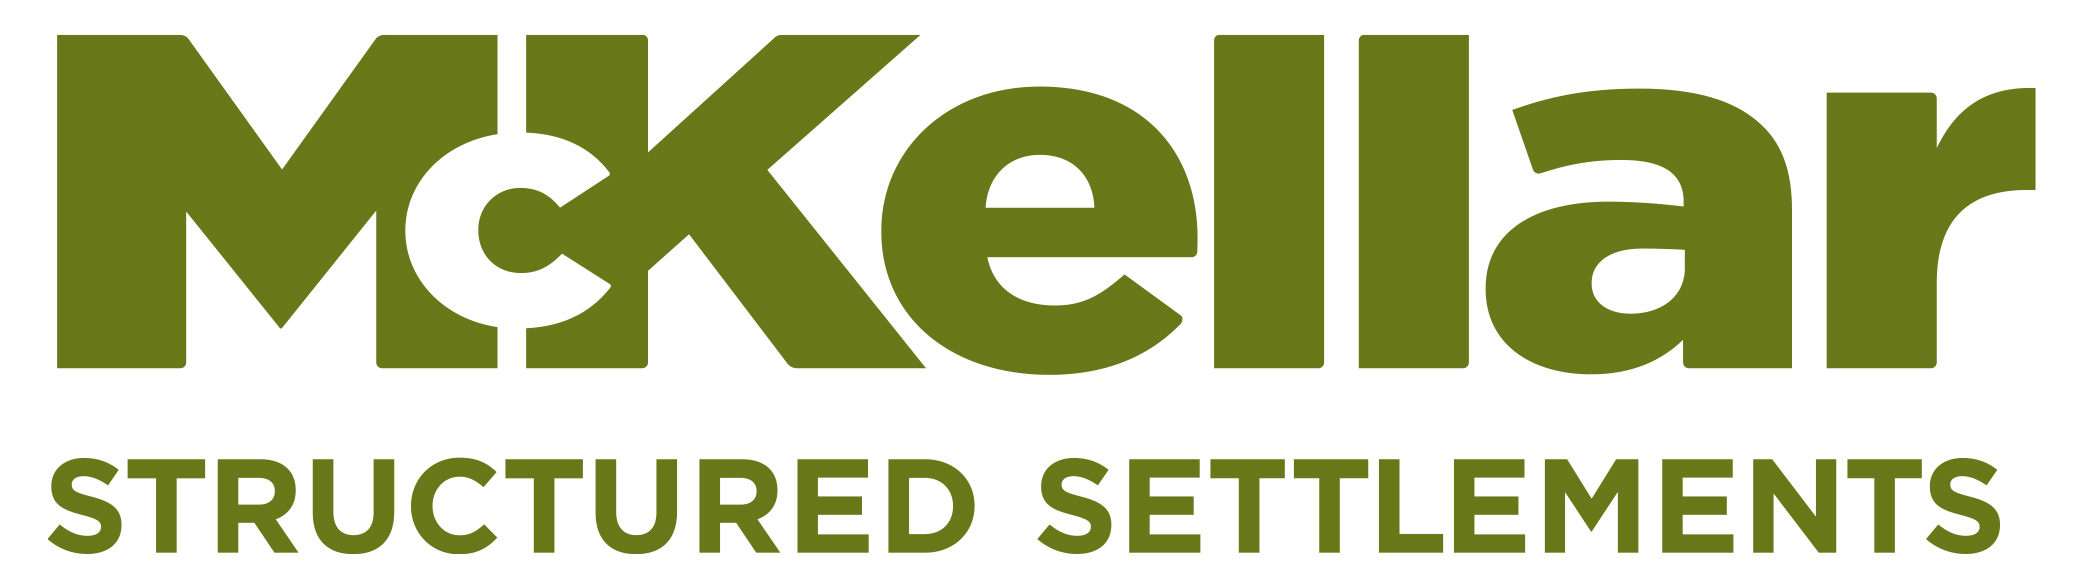 McKellar Structured Settlements - Platinum Sponsor